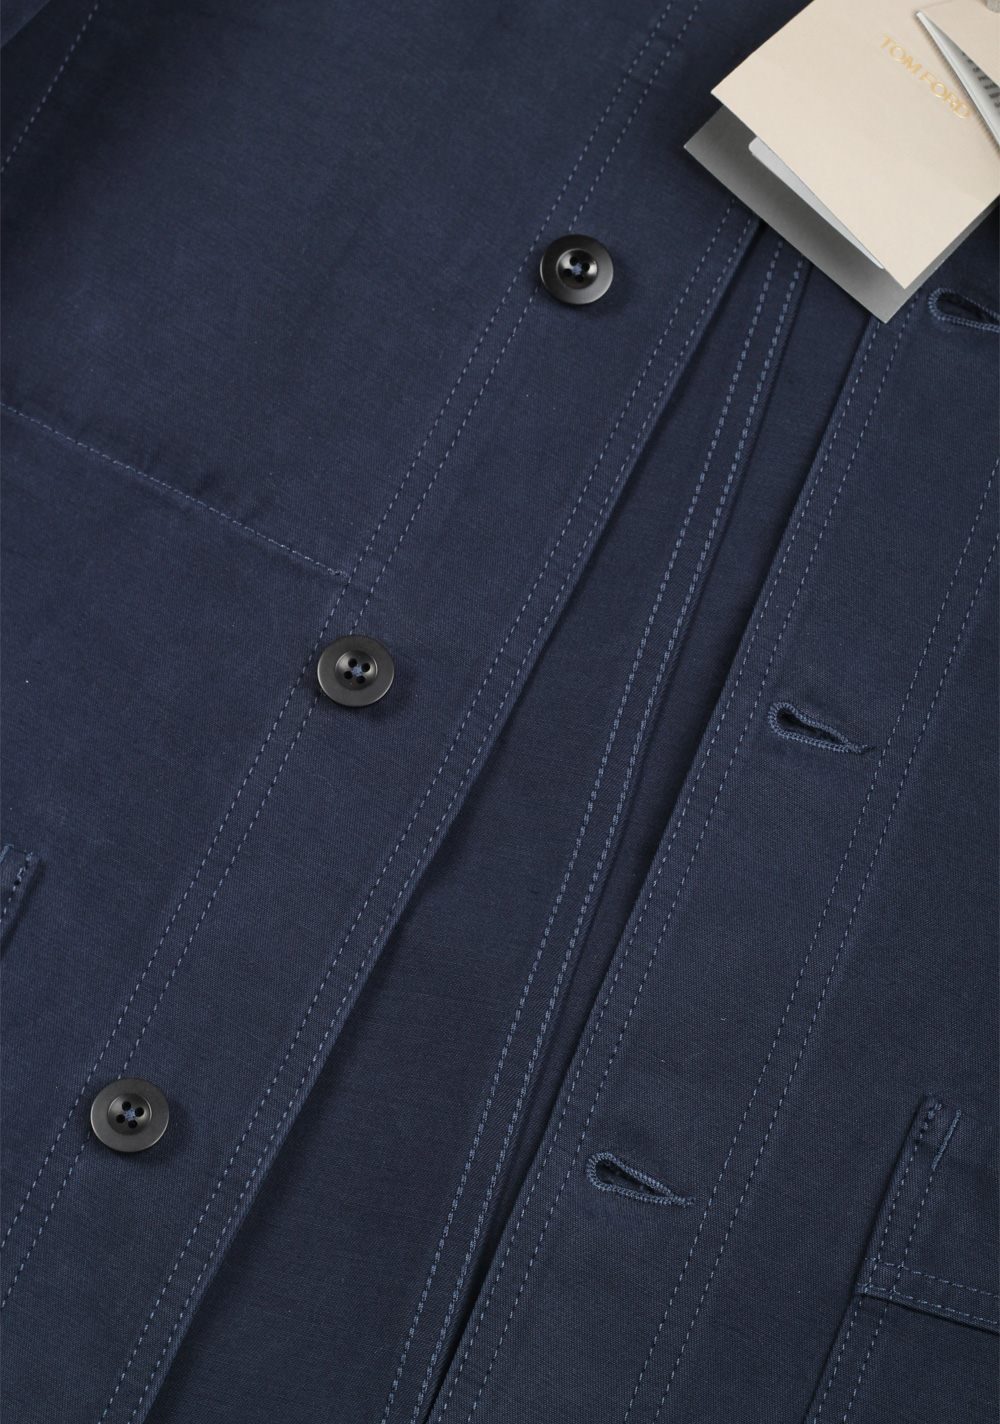 TOM FORD Blue Cotton Overshirt Coat | Costume Limité